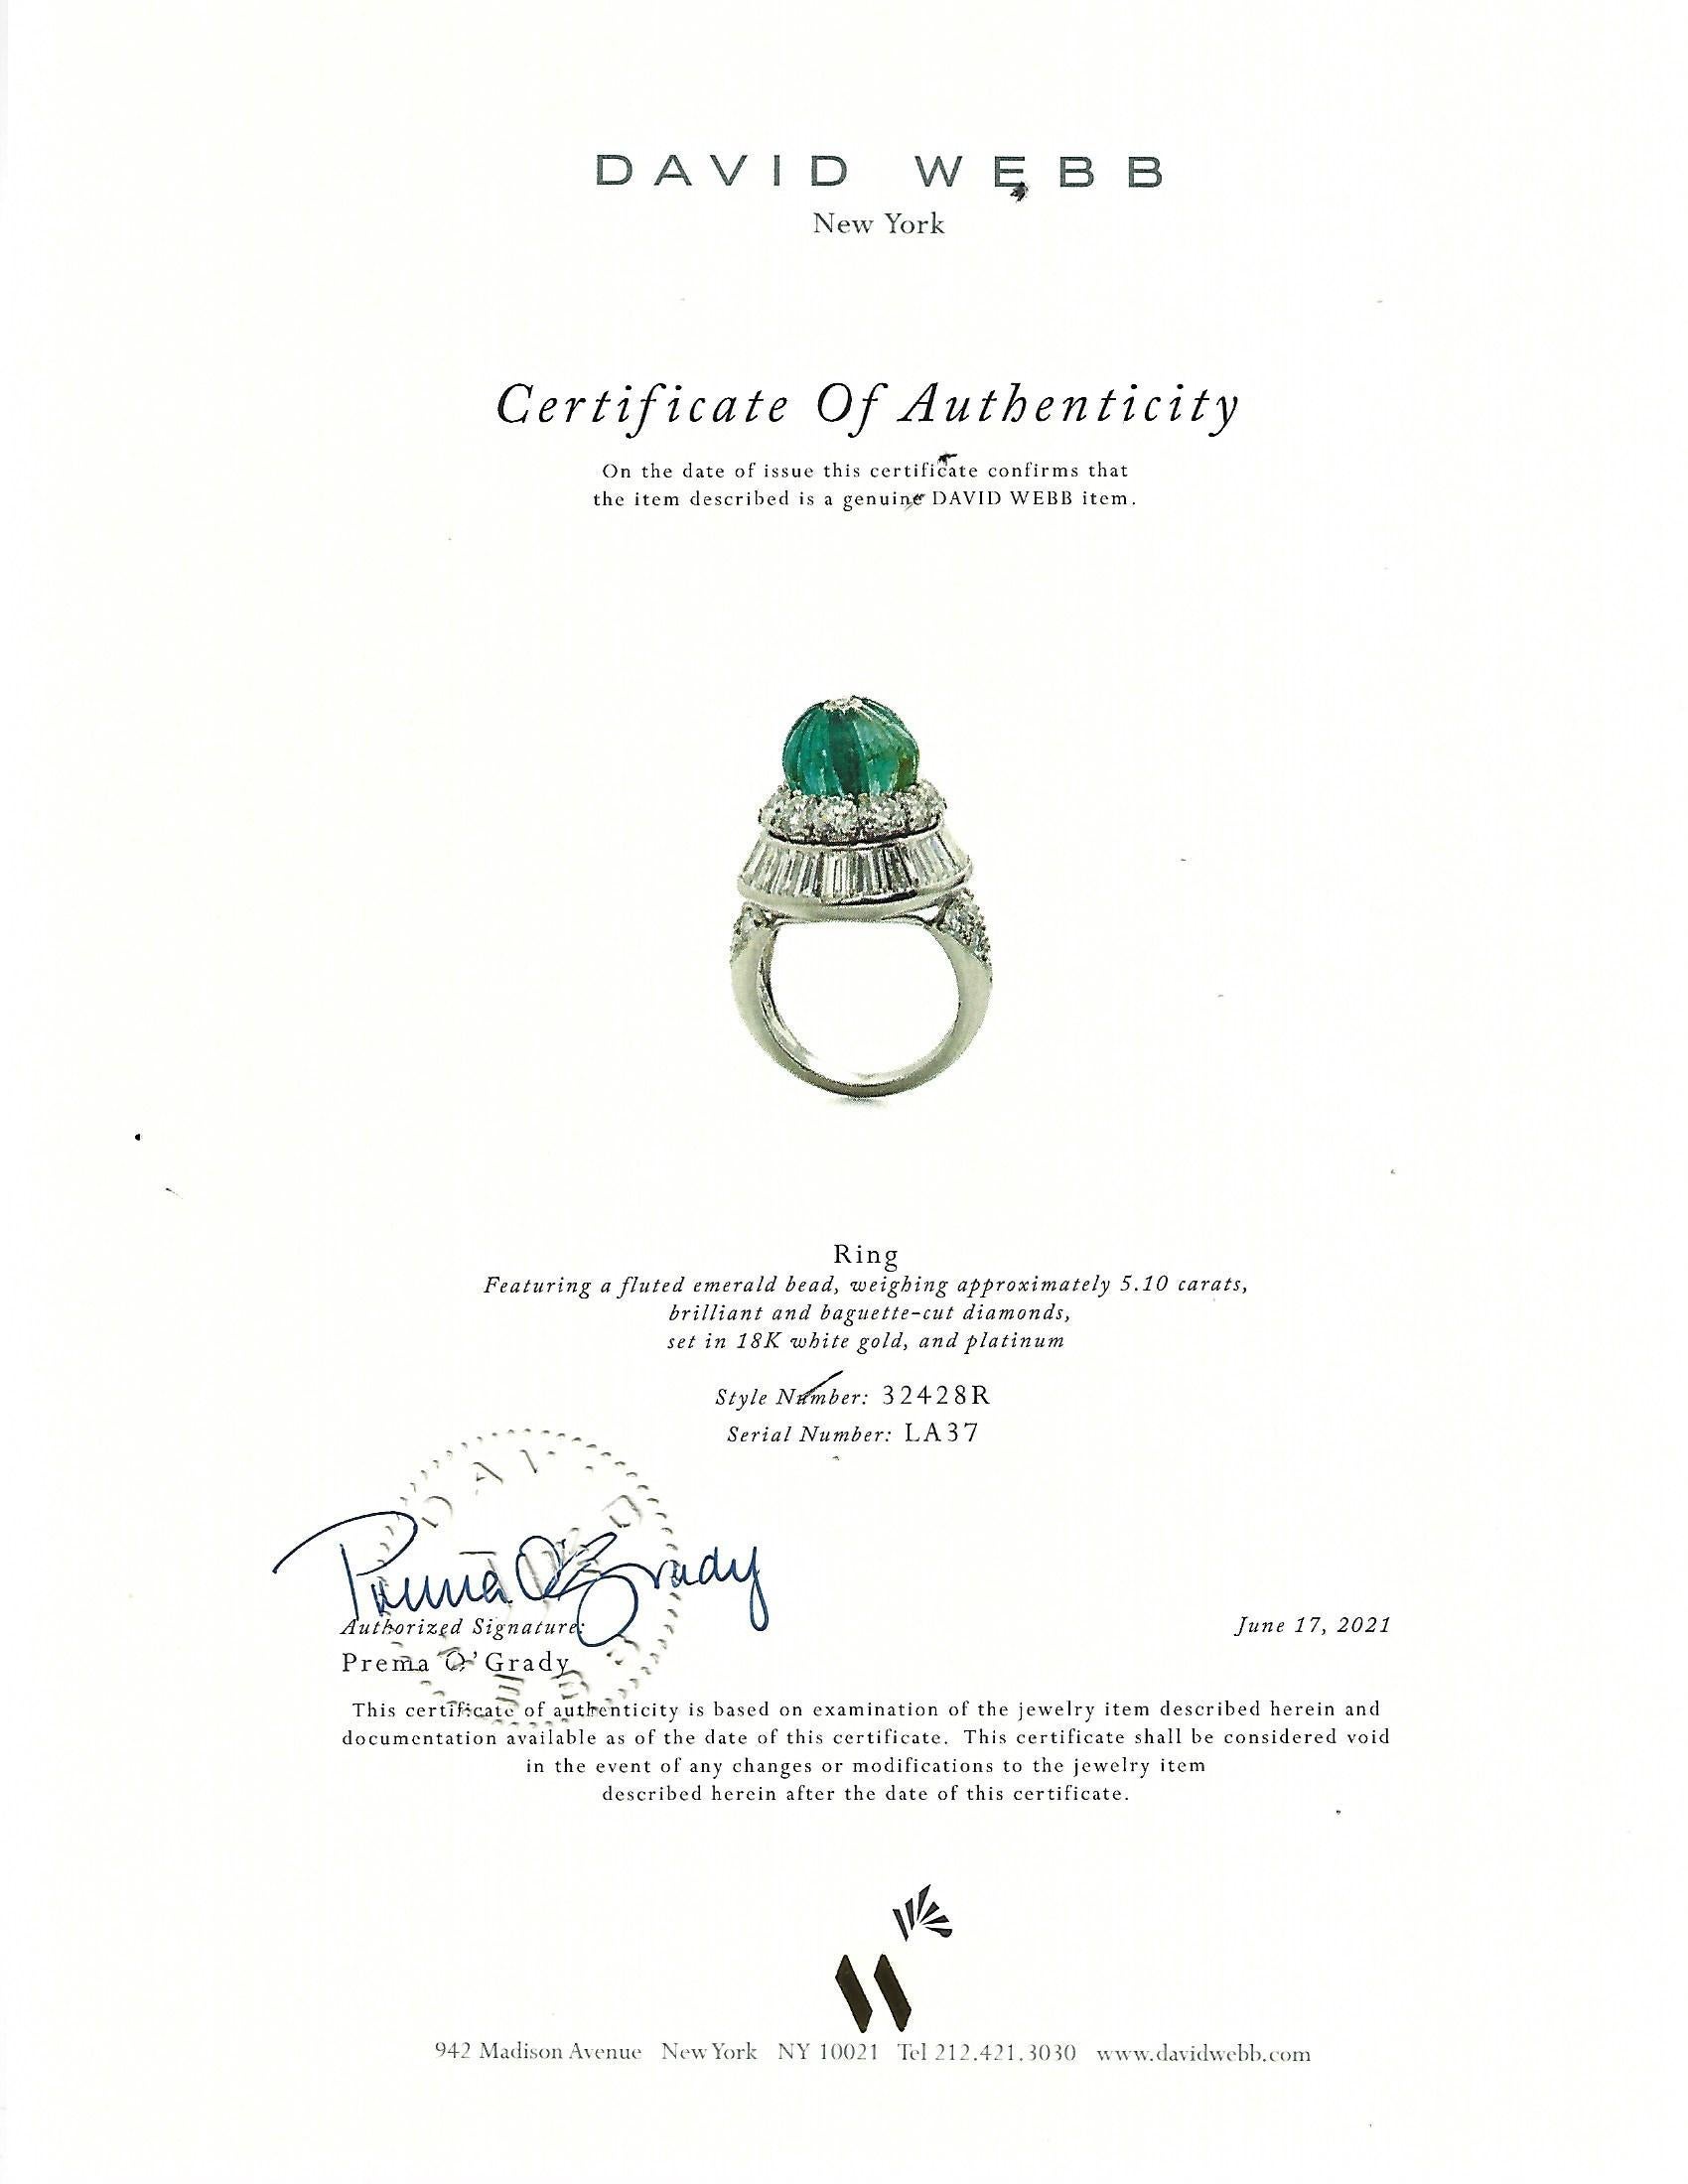 Vintage David Webb 5.10ct Carved Emerald Bead and Diamond Ring in Platinum&18kwg 3